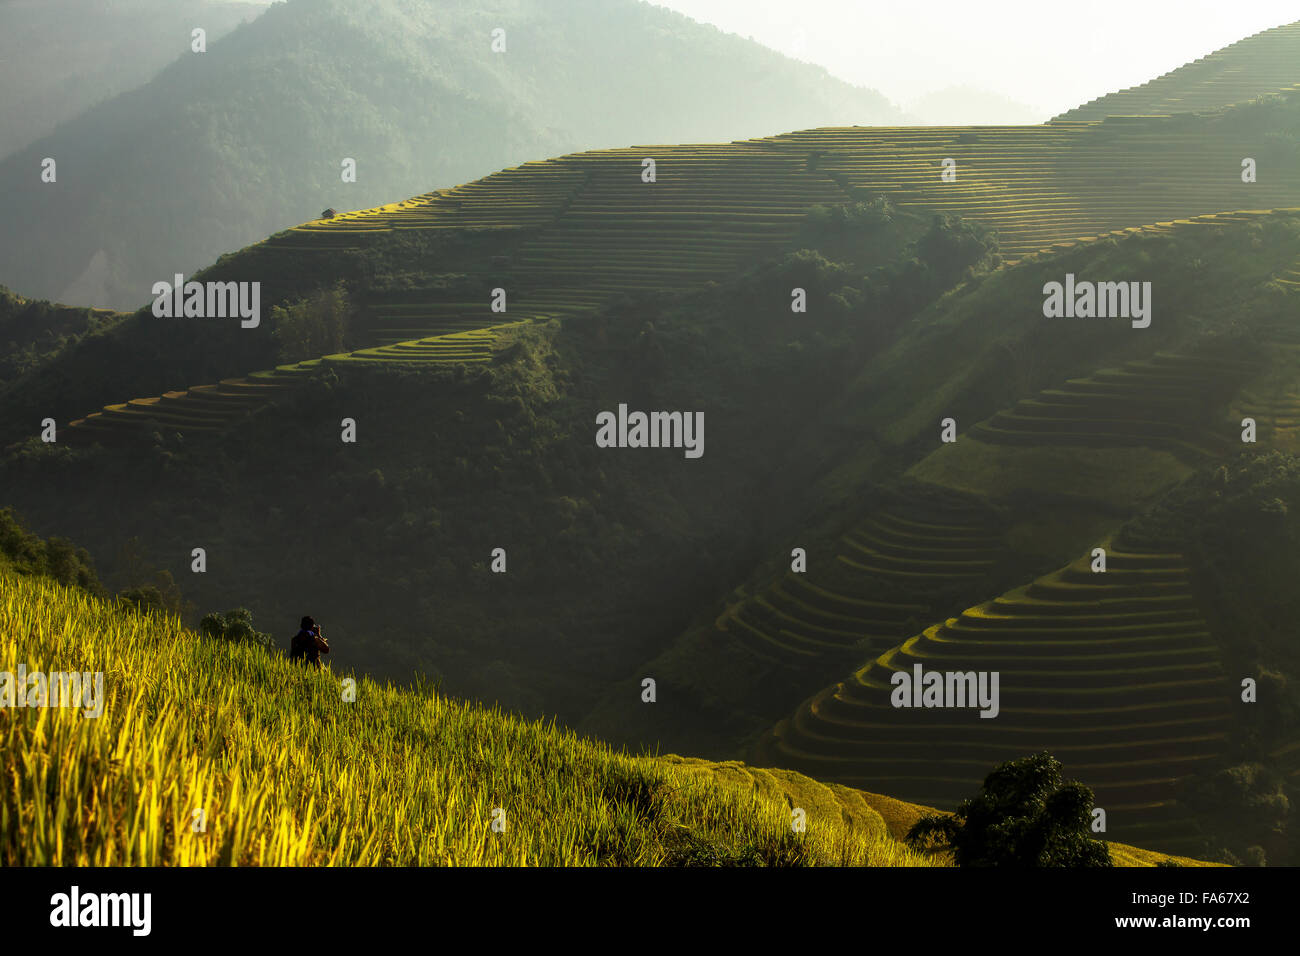 Man taking a photograph in Rice terraces in the mountain, Yenbai, Vietnam Stock Photo